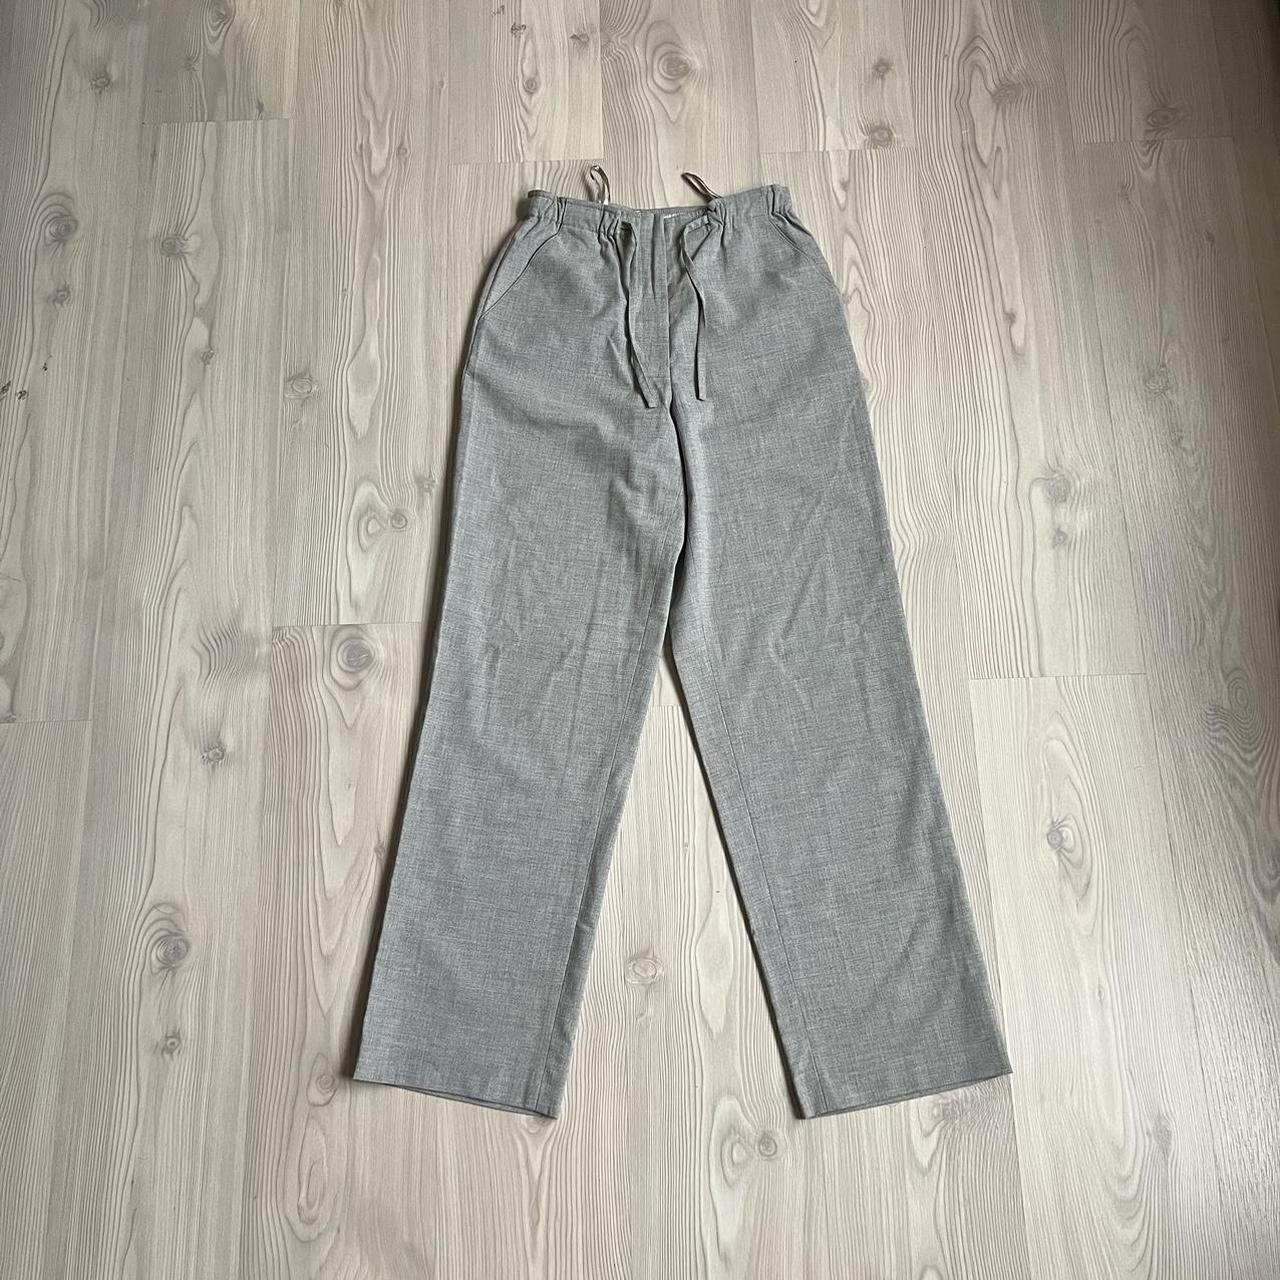 Apiece Apart Women's Grey Trousers